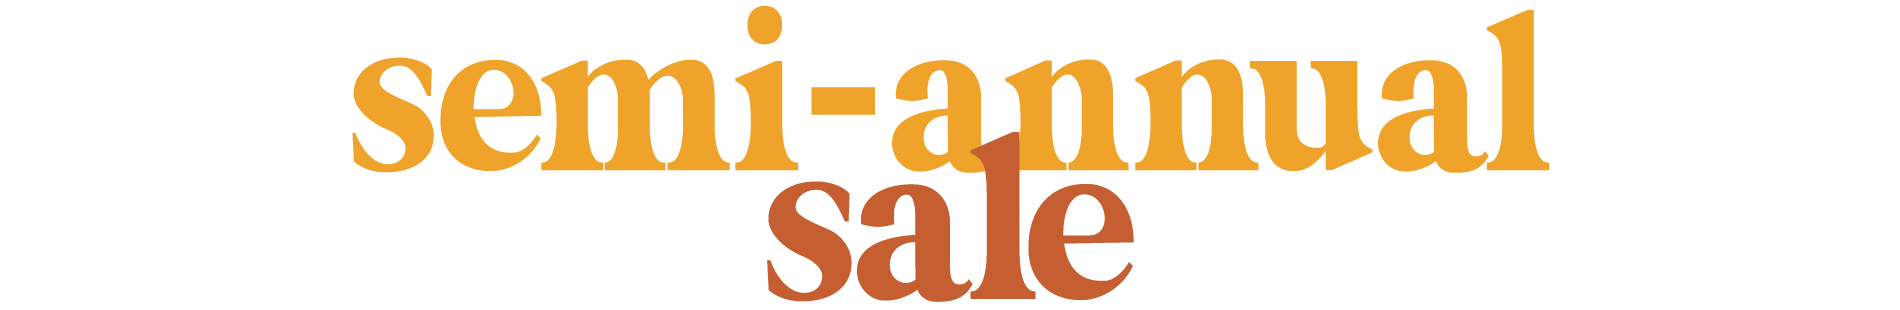 Semi-annual Sale